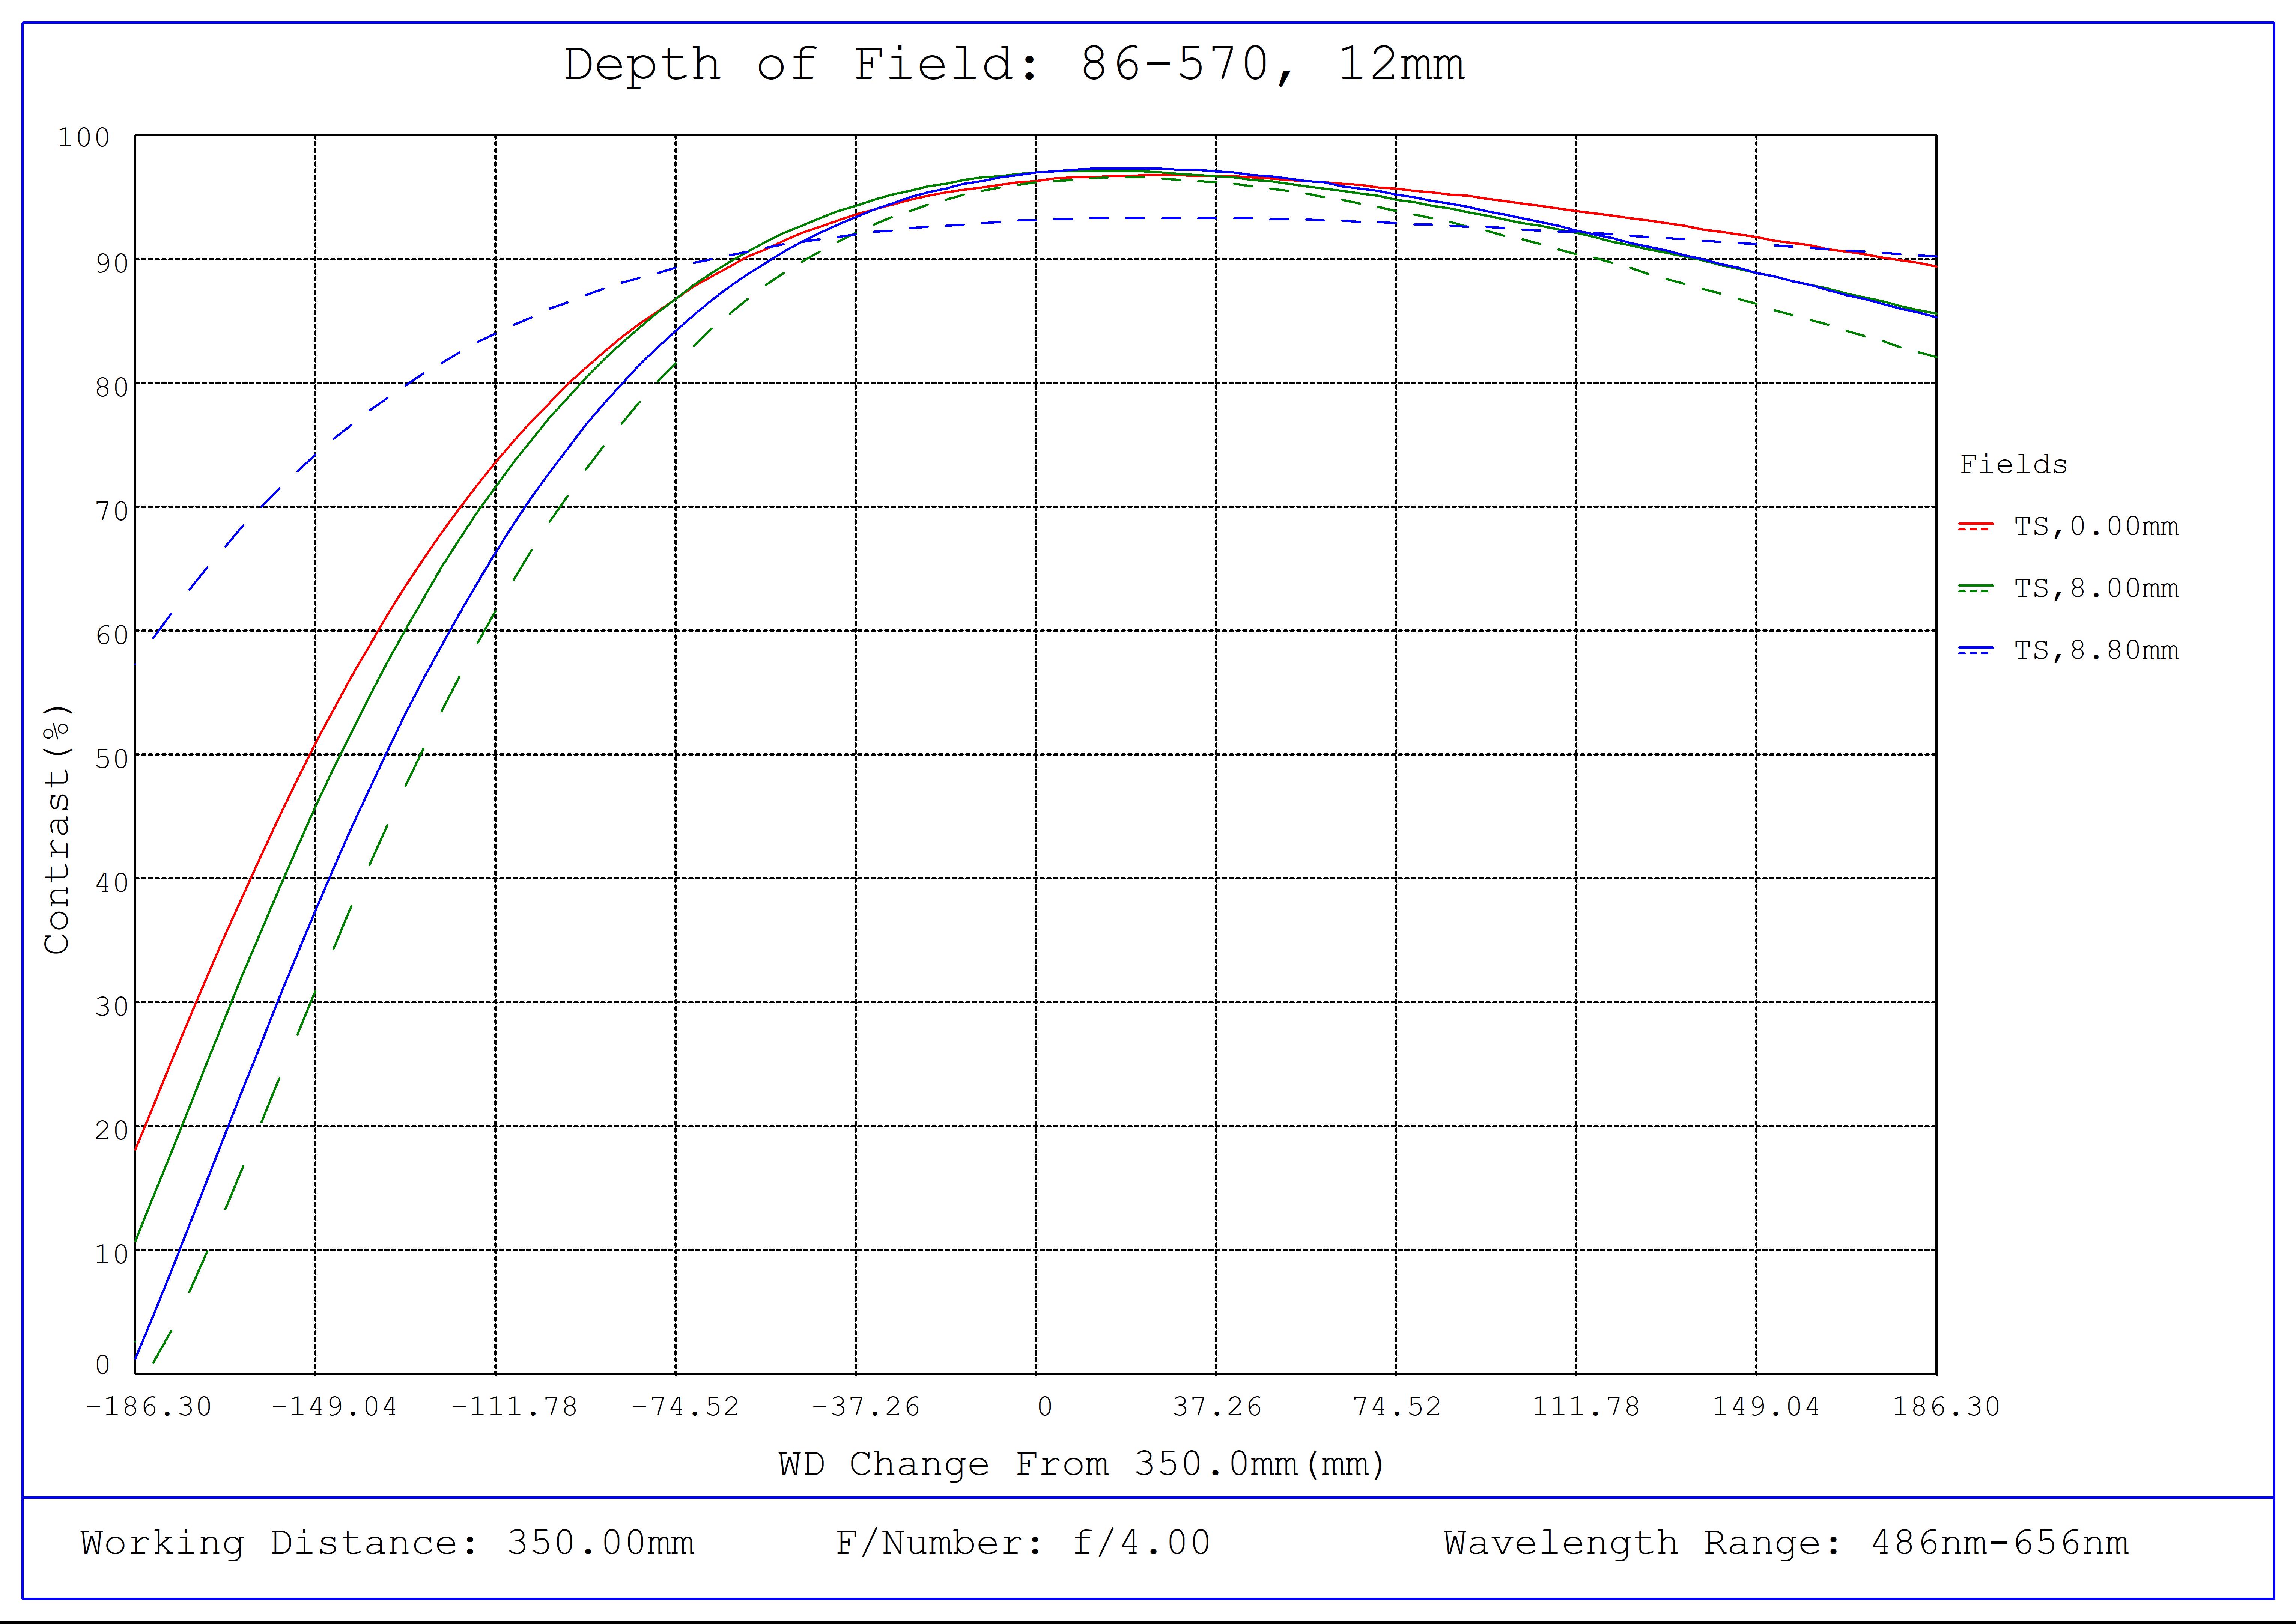 #86-570, 12mm Focal Length, HP Series Fixed Focal Length Lens, Depth of Field Plot, 350mm Working Distance, f4